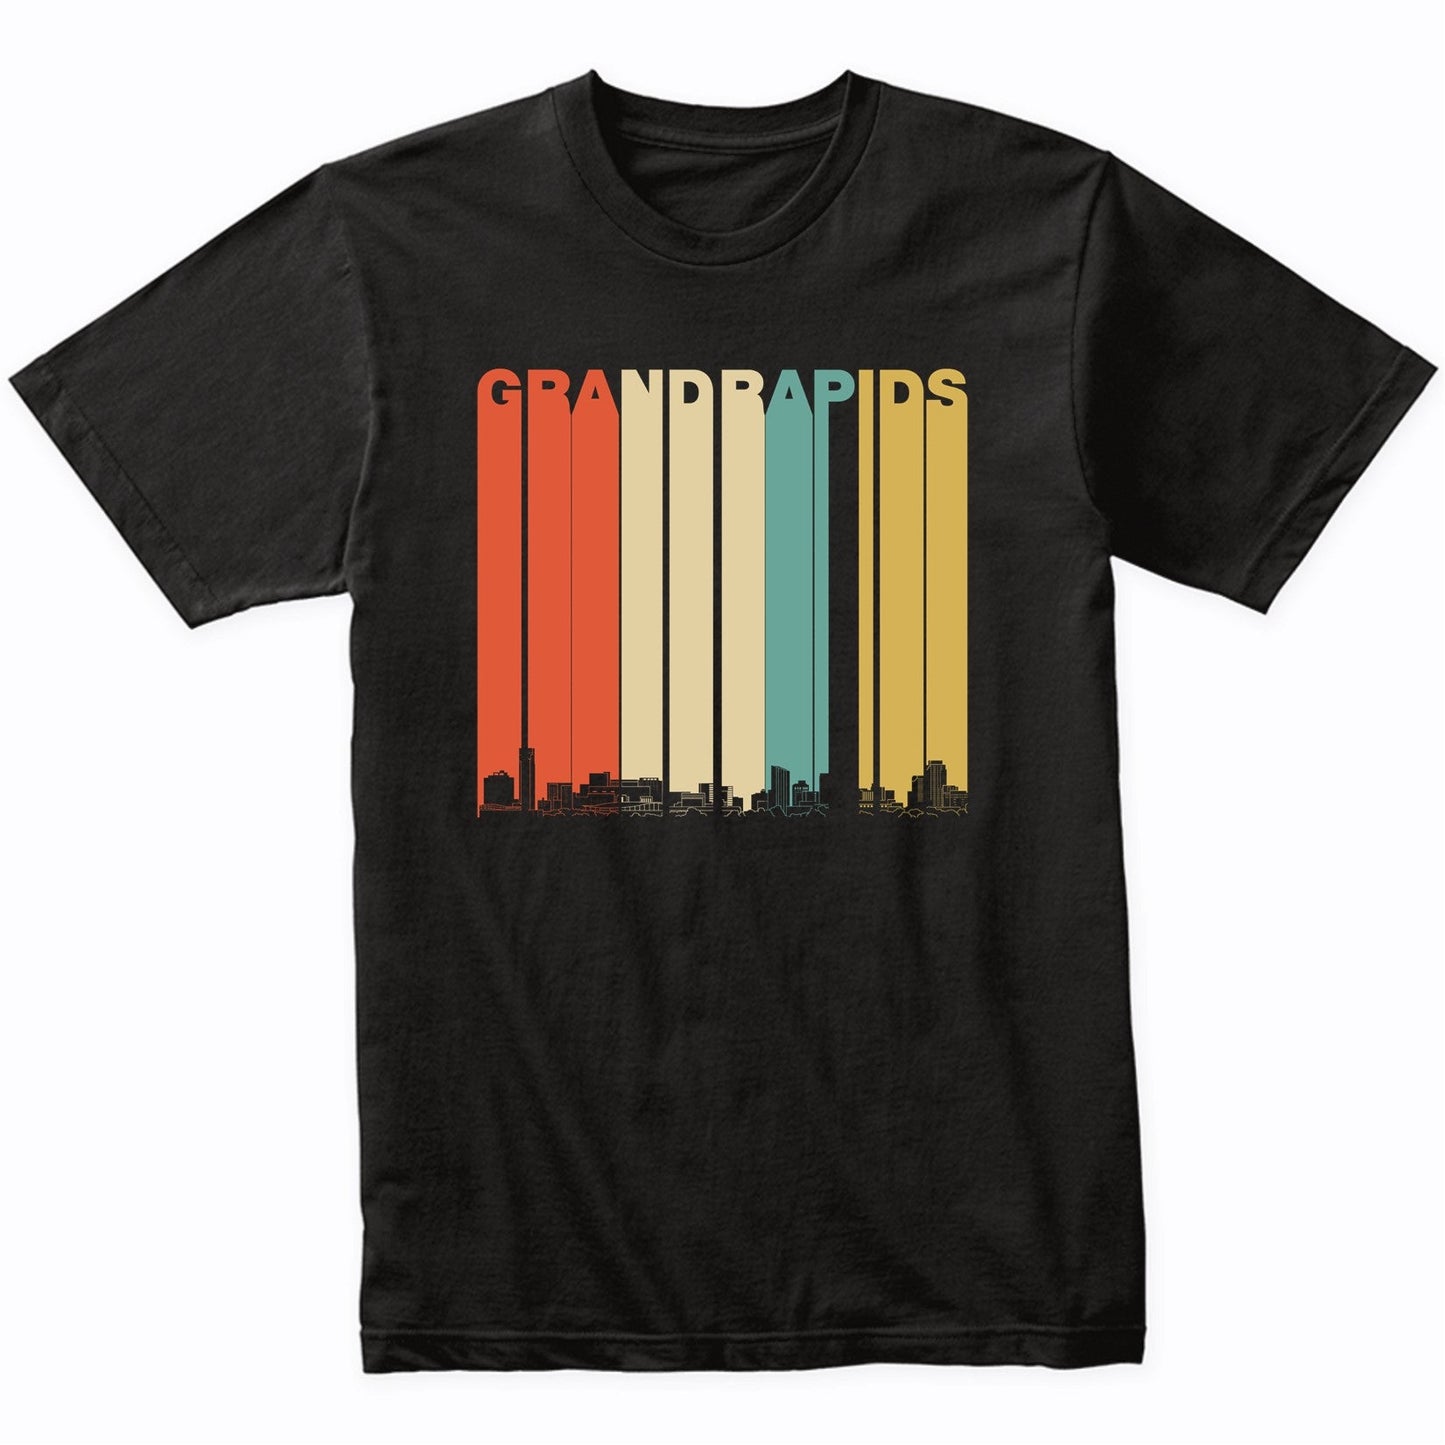 Vintage 1970's Style Grand Rapids Michigan Skyline T-Shirt